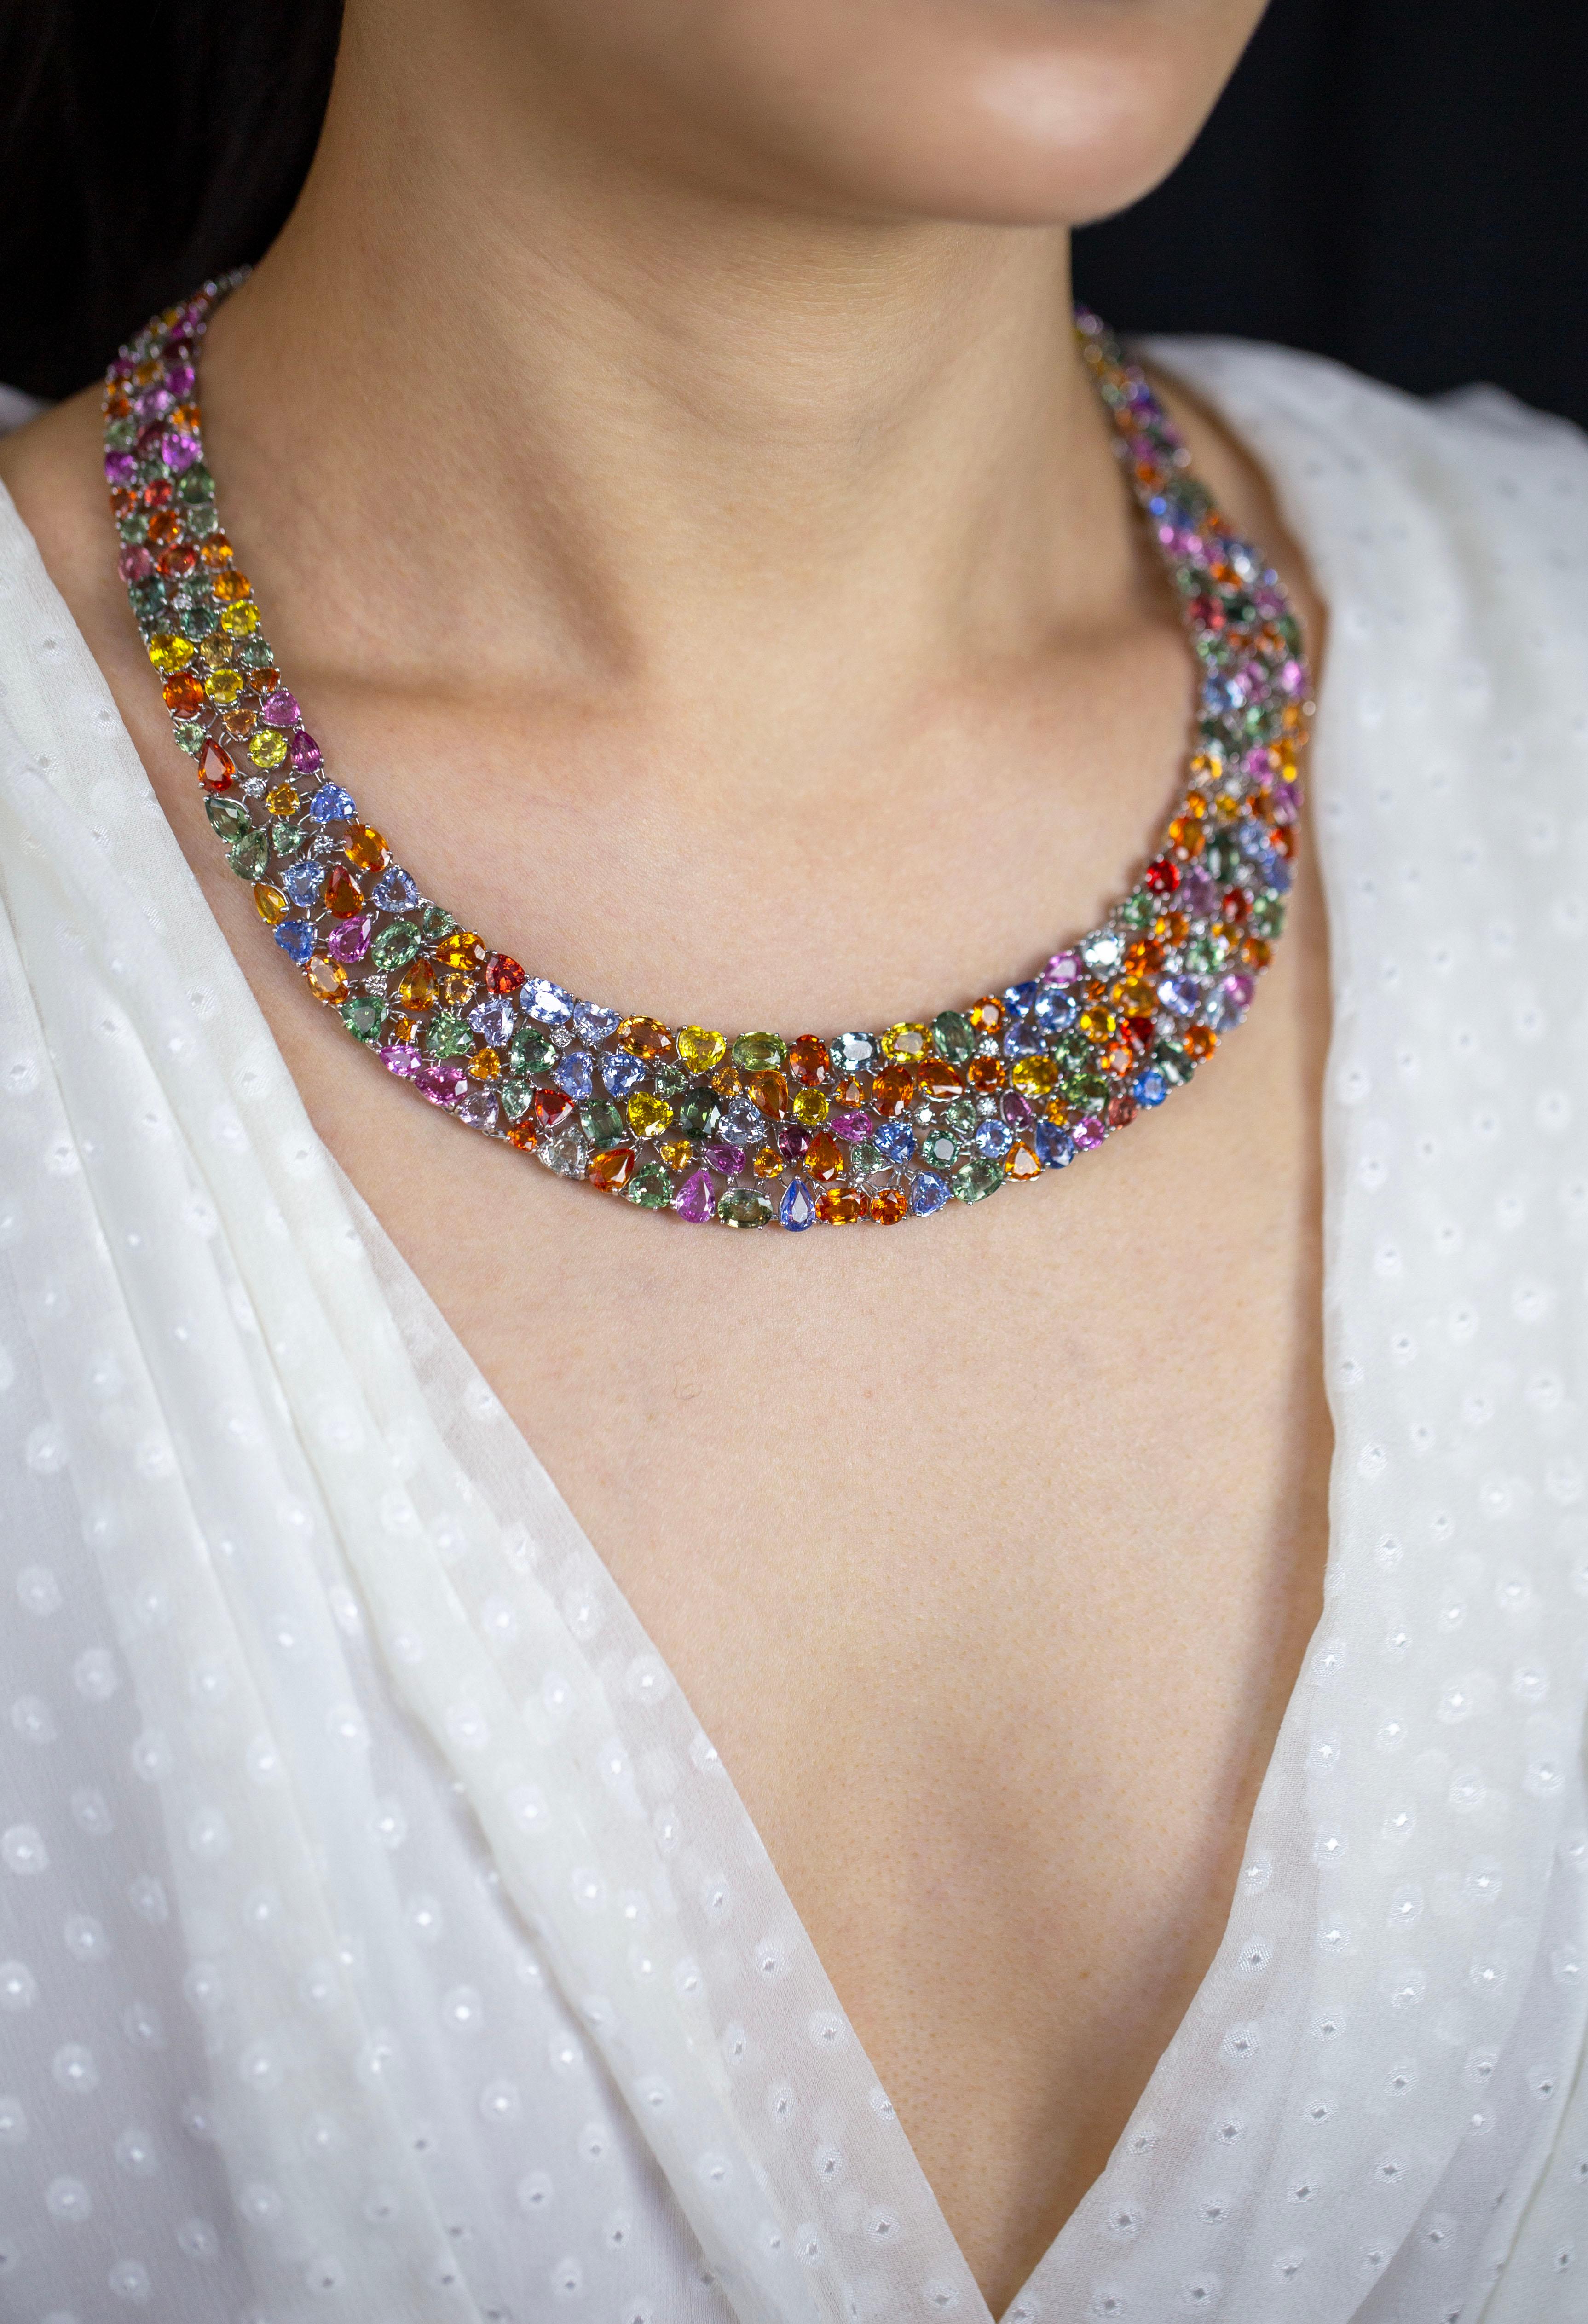 Contemporary Roman Malakov 161.55 Carats Multi-Color Mixed Cut Sapphire Gemstone Necklace For Sale